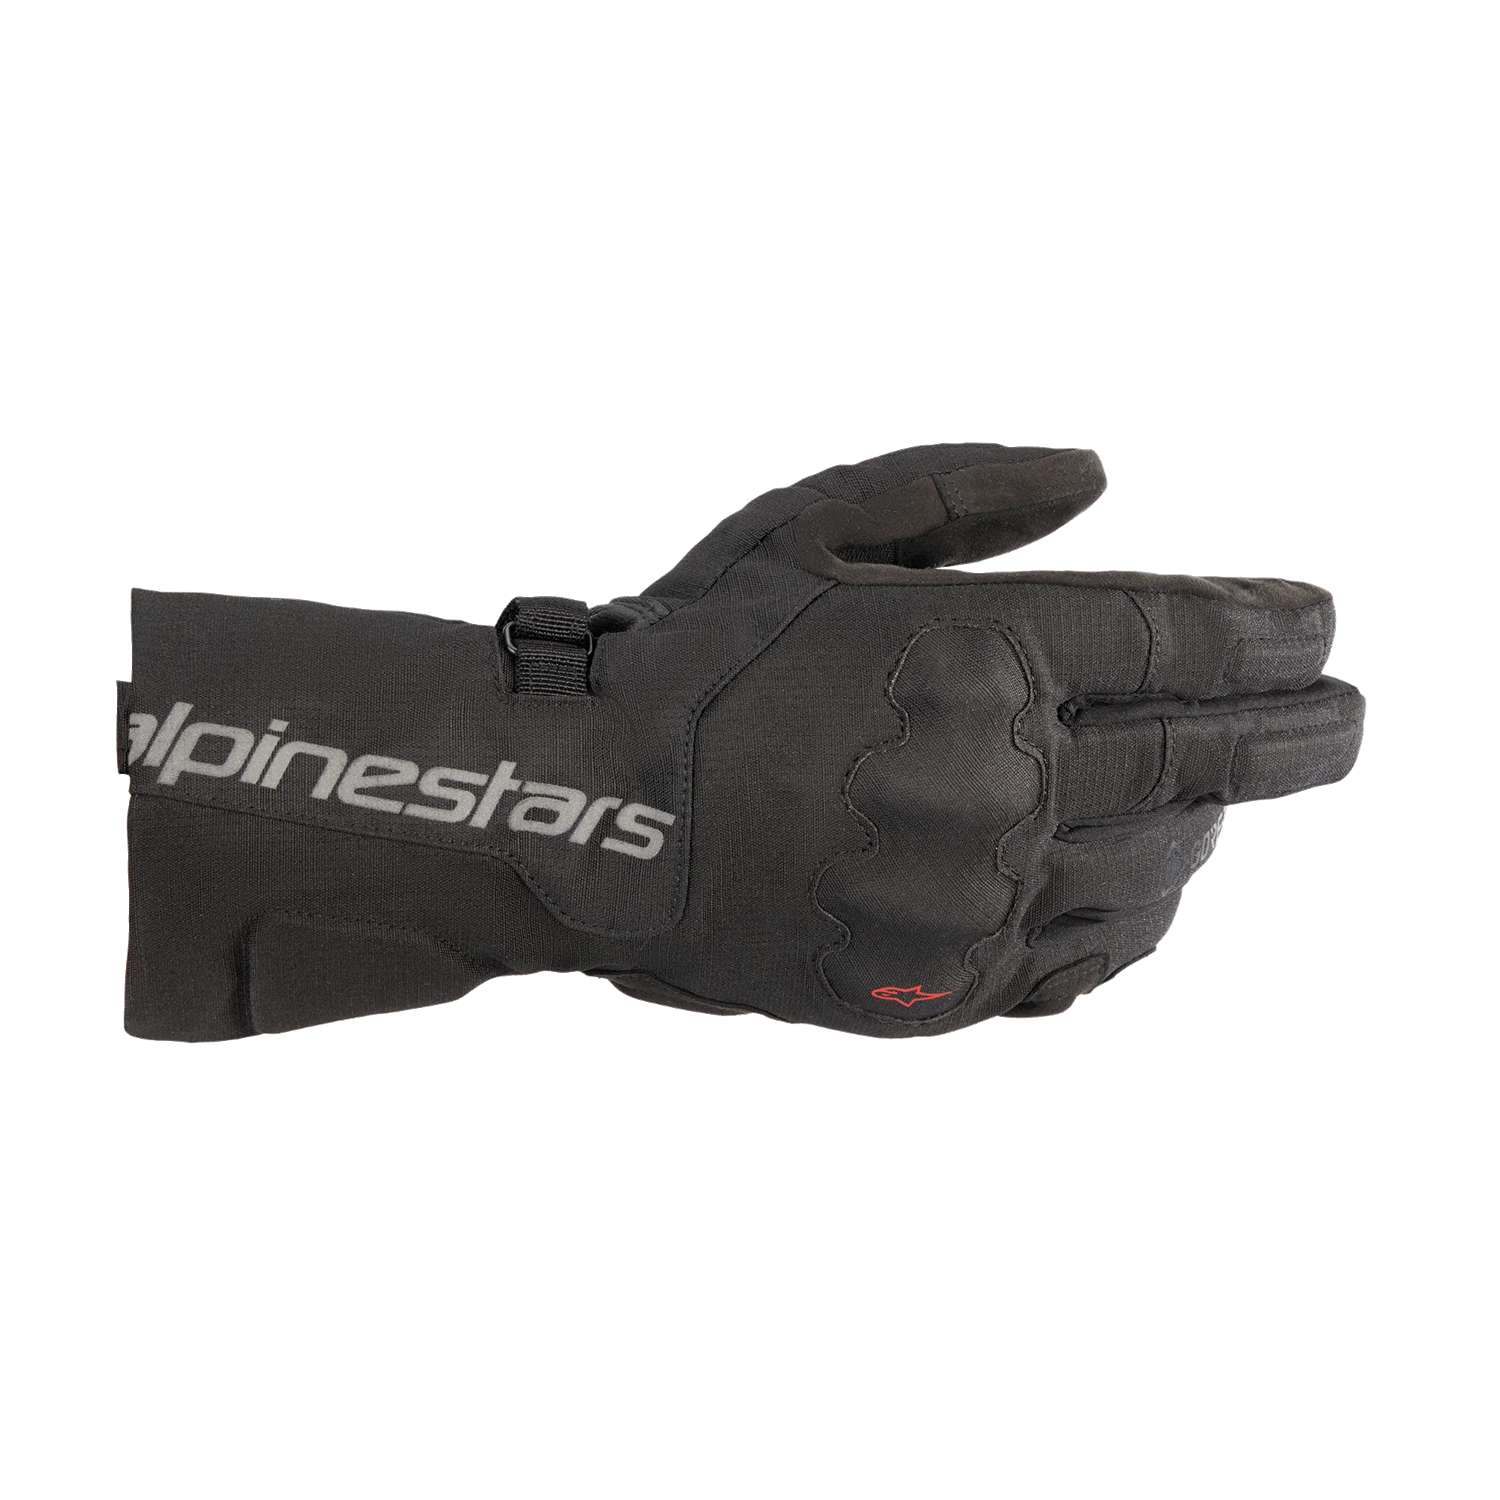 Image of Alpinestars Wr-X Gore-Tex Gloves Black Size M EN